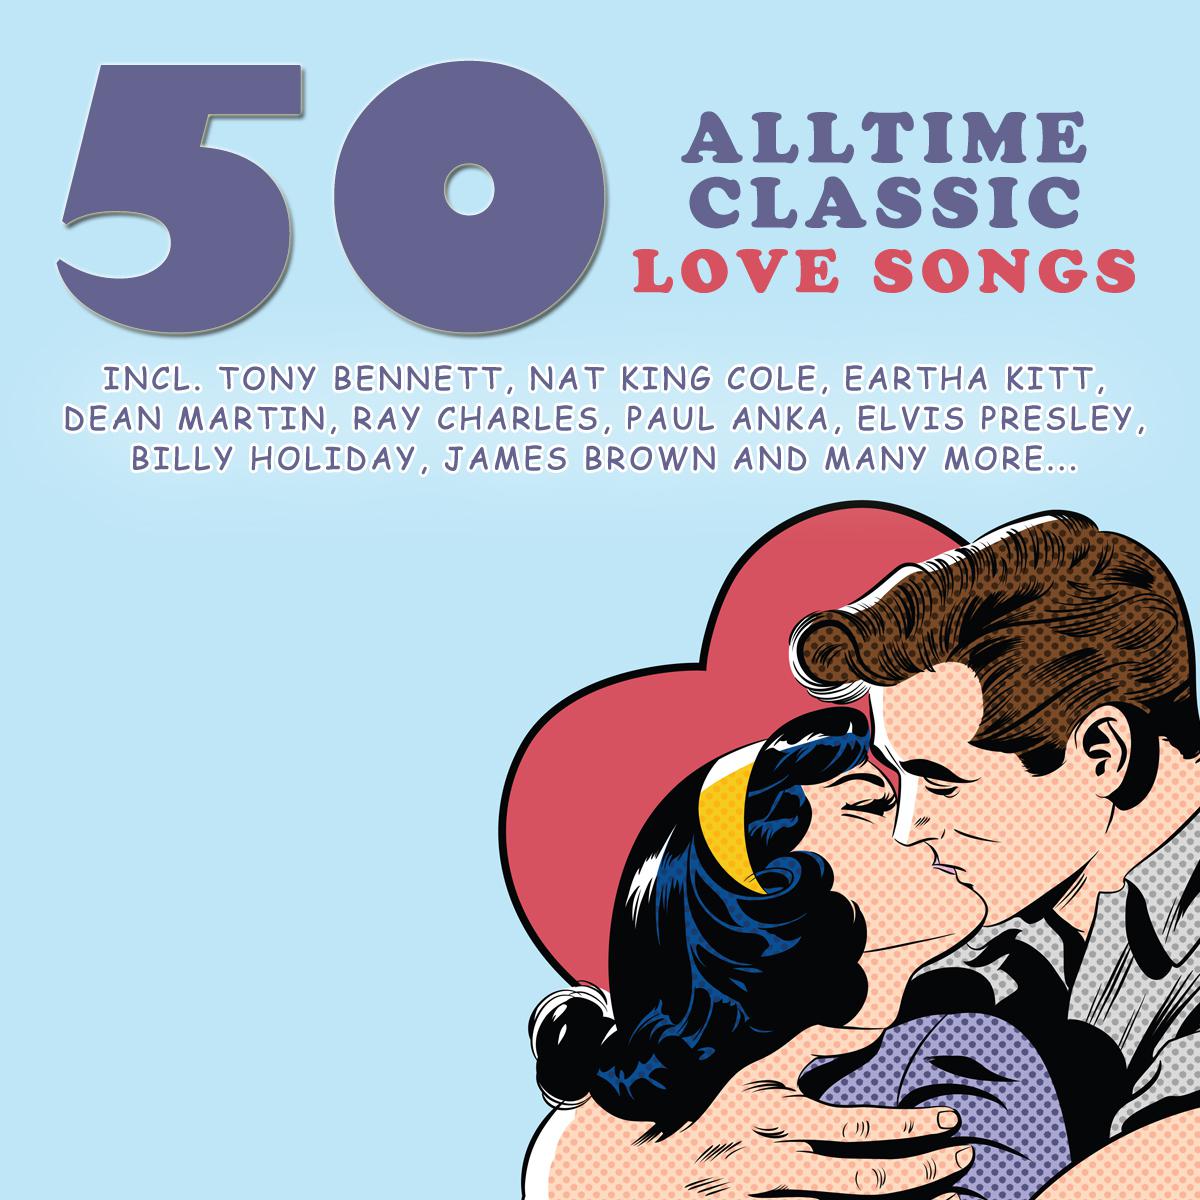 50 Alltime Classic Love Songs